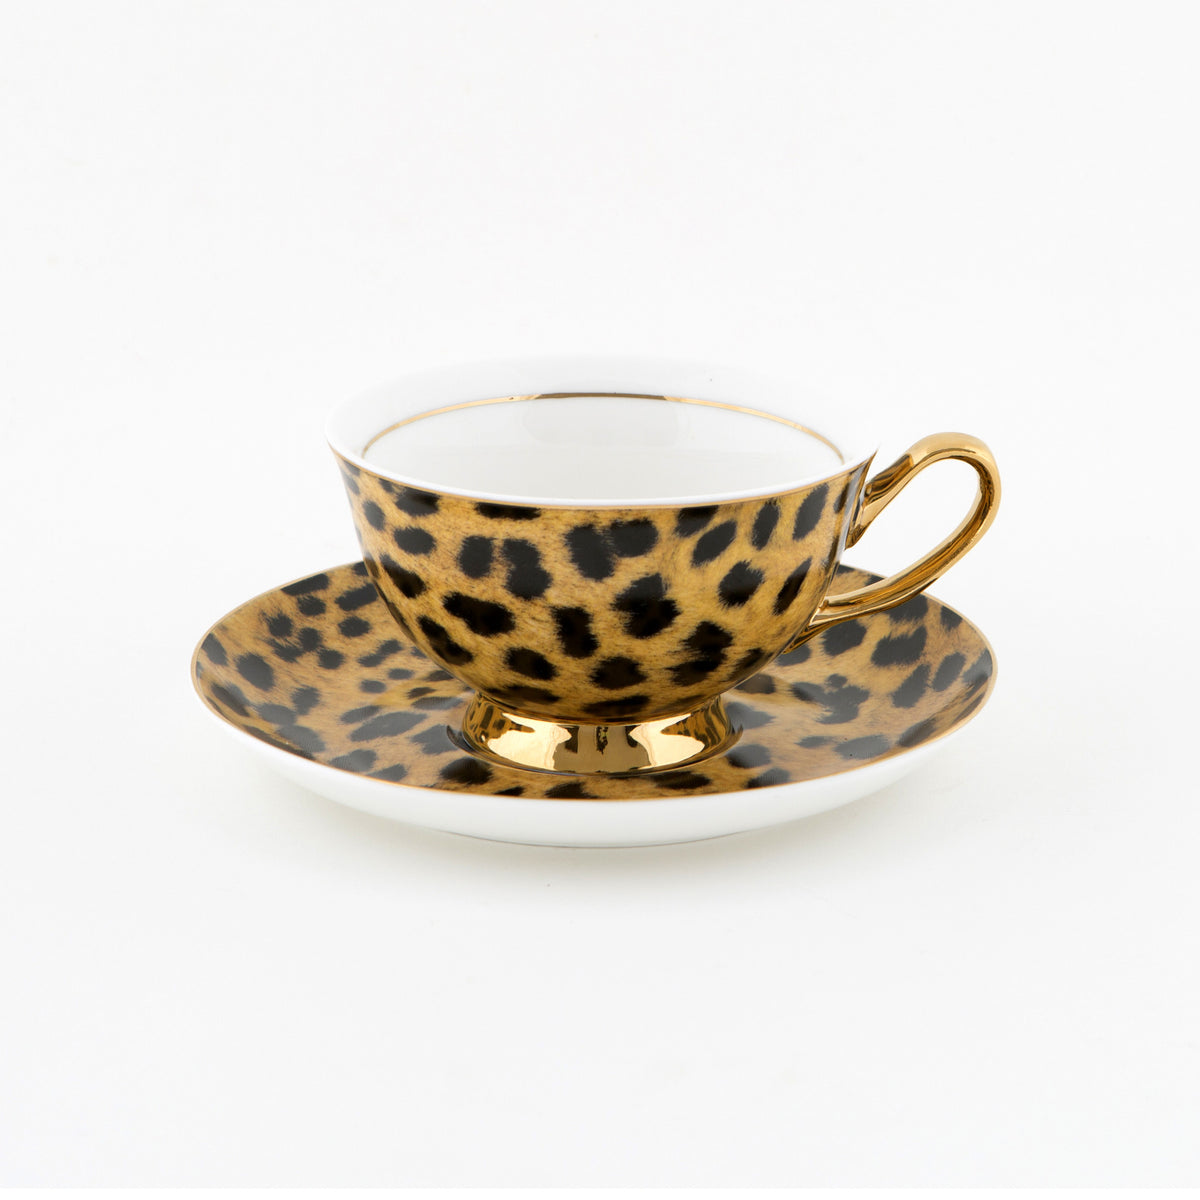 Leopard Print Teacup and Saucer